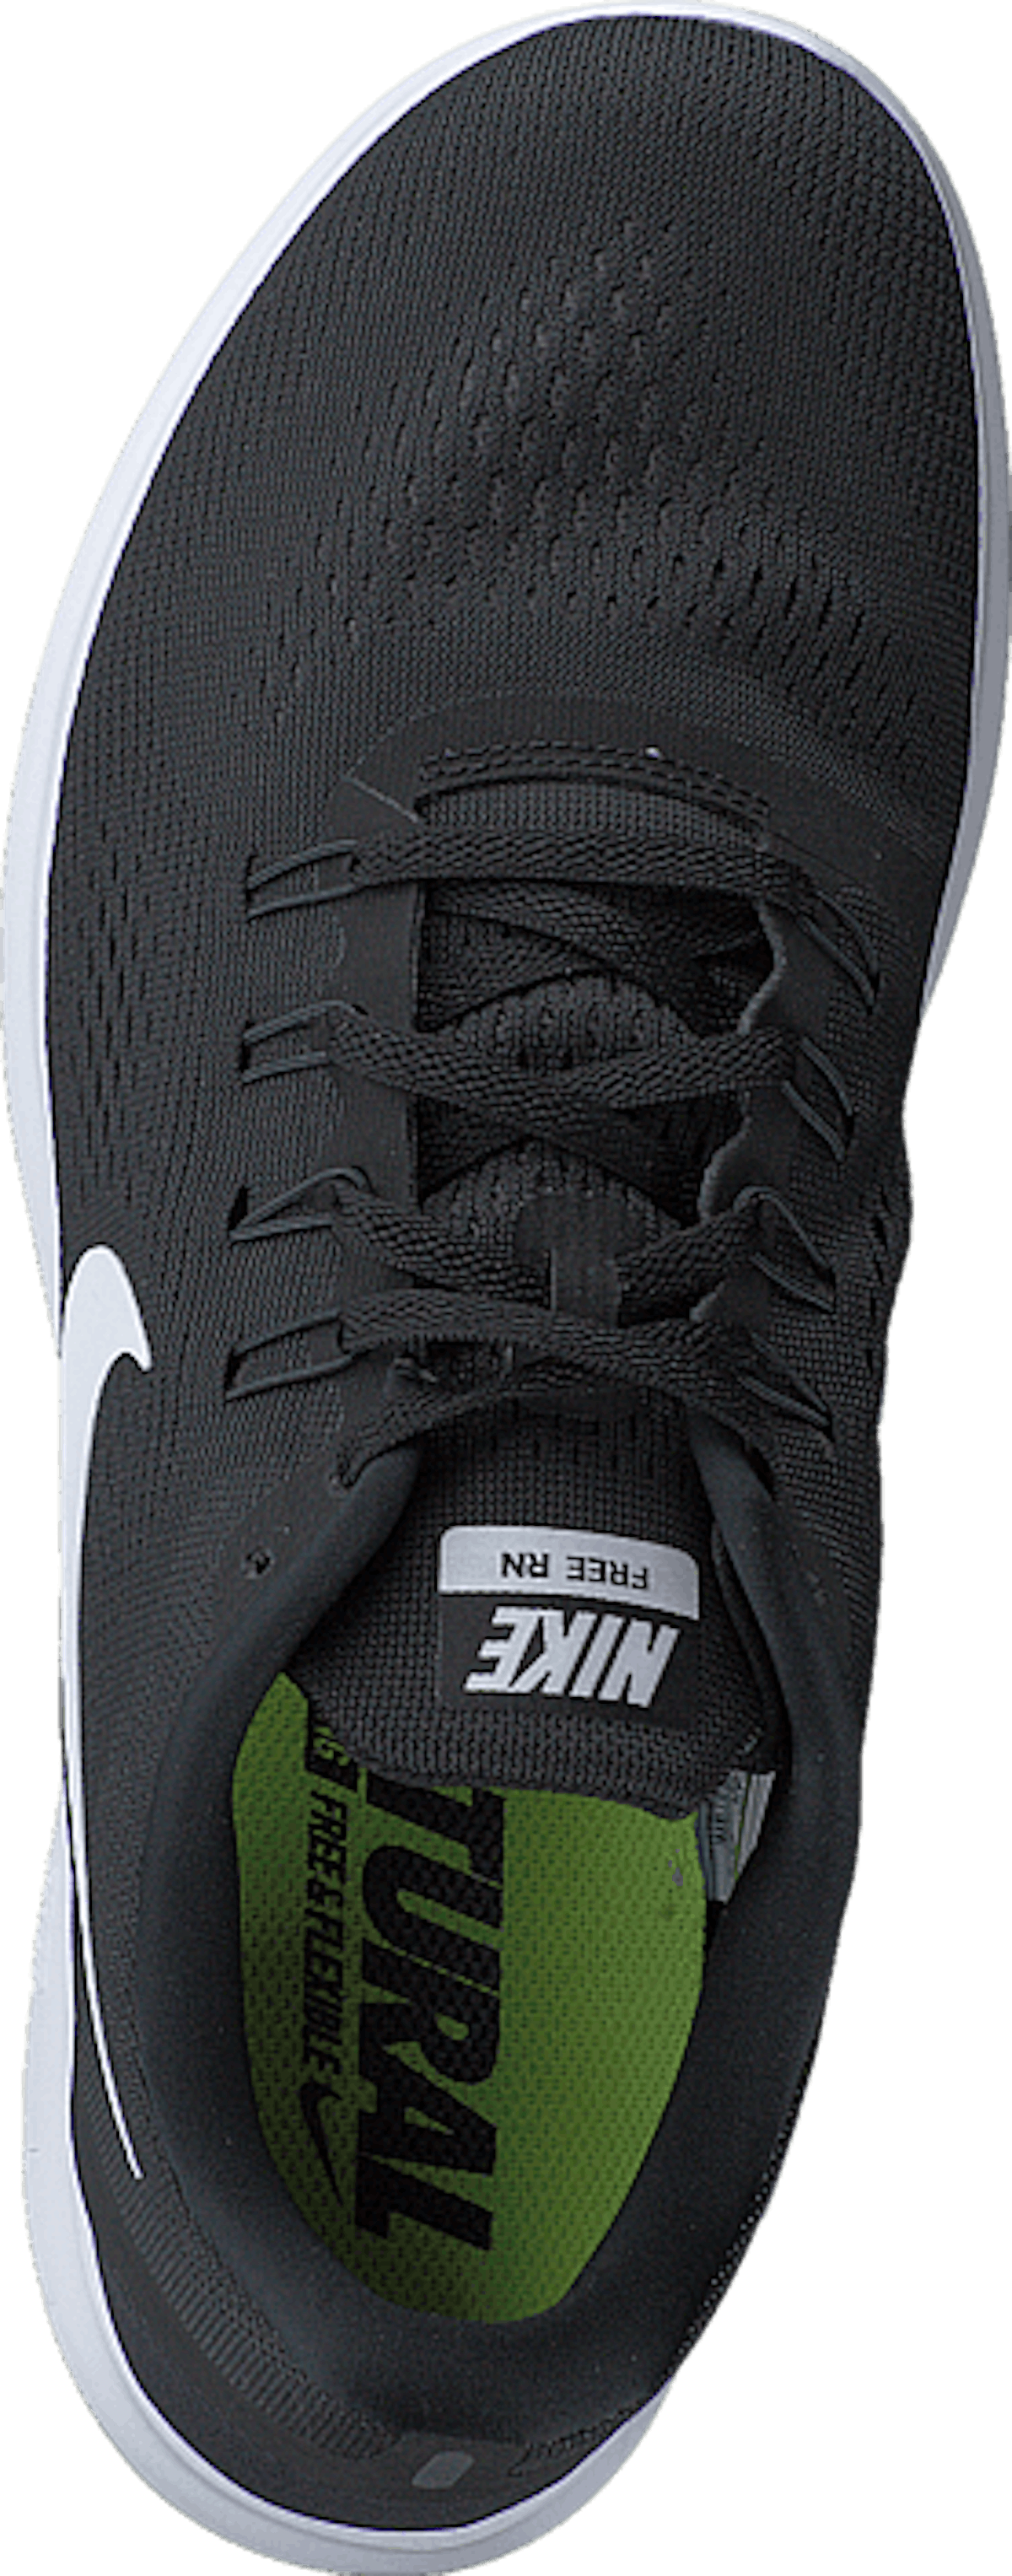 Nike Free RN Black/White-Anthracite